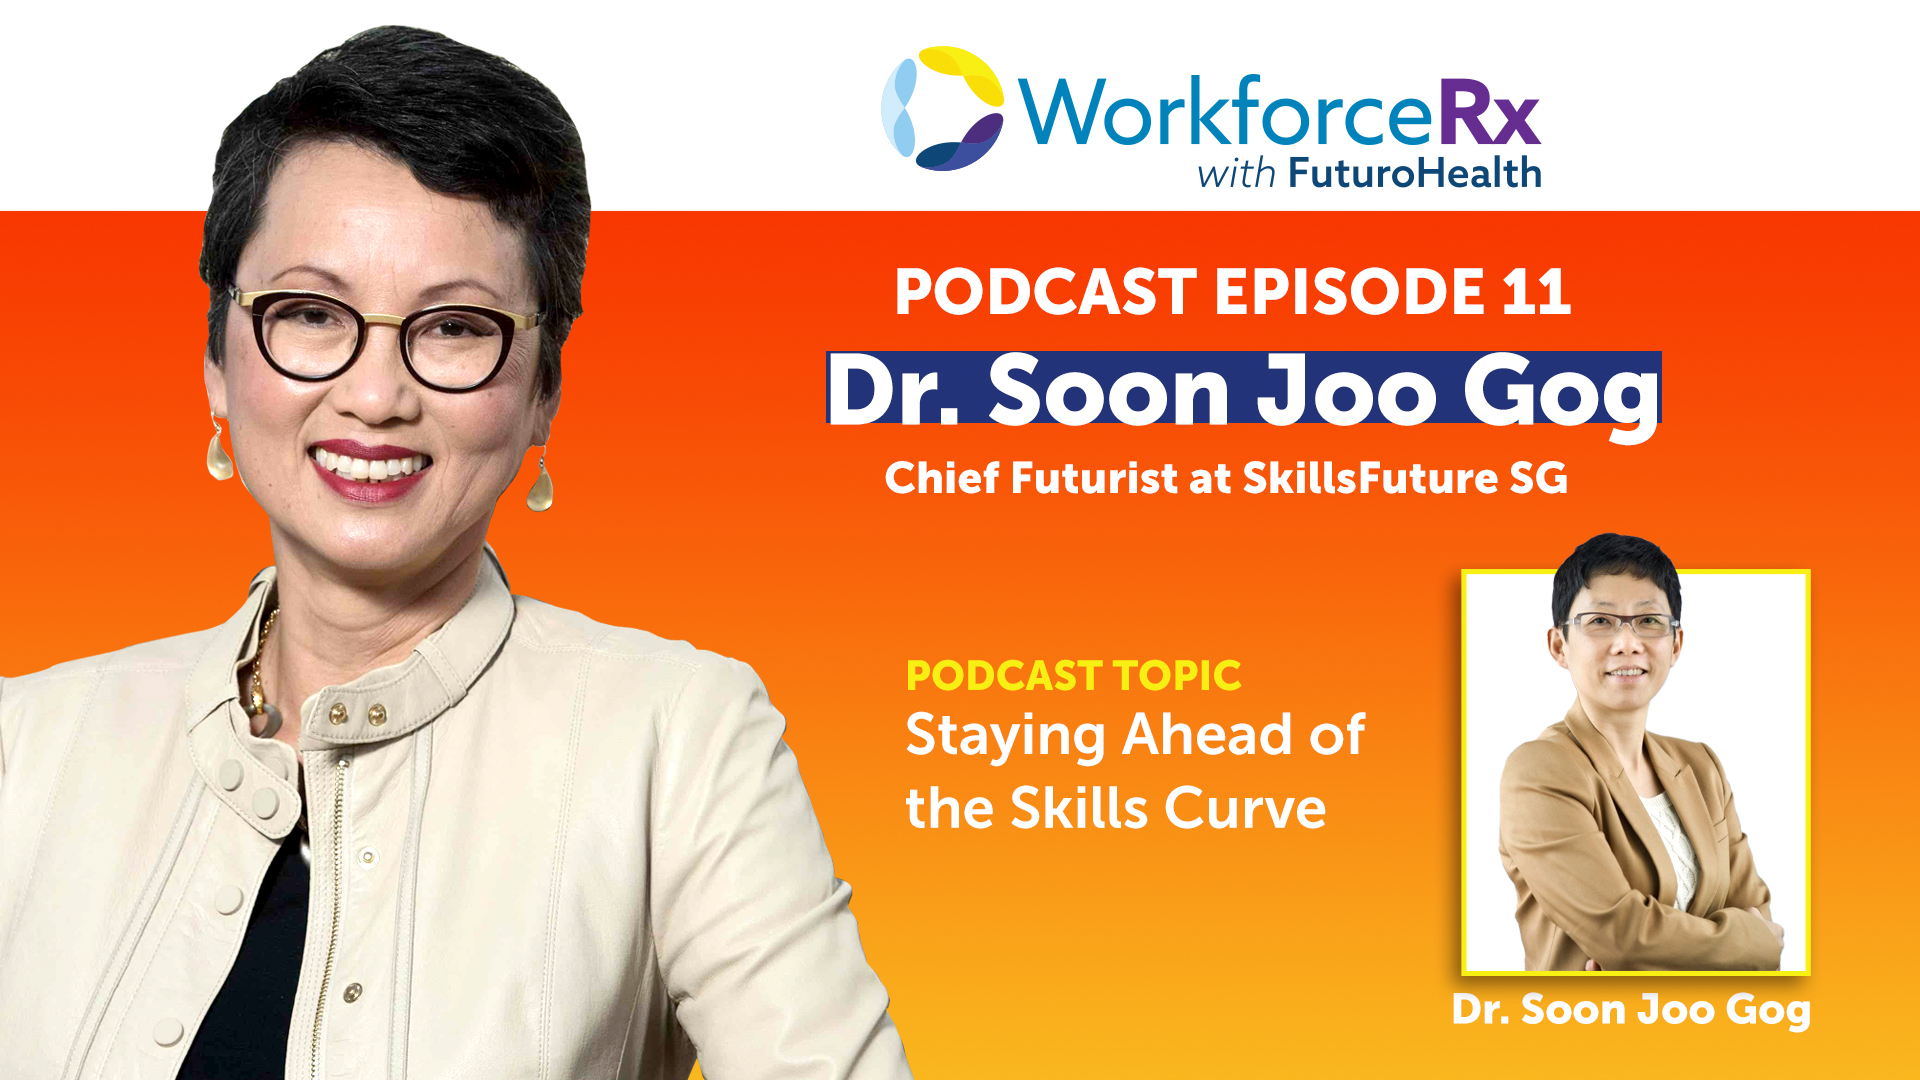 Dr. Soon Joo Gog, Chief Futurist at SkillsFuture SG - Staying Ahead of the Skills Curve